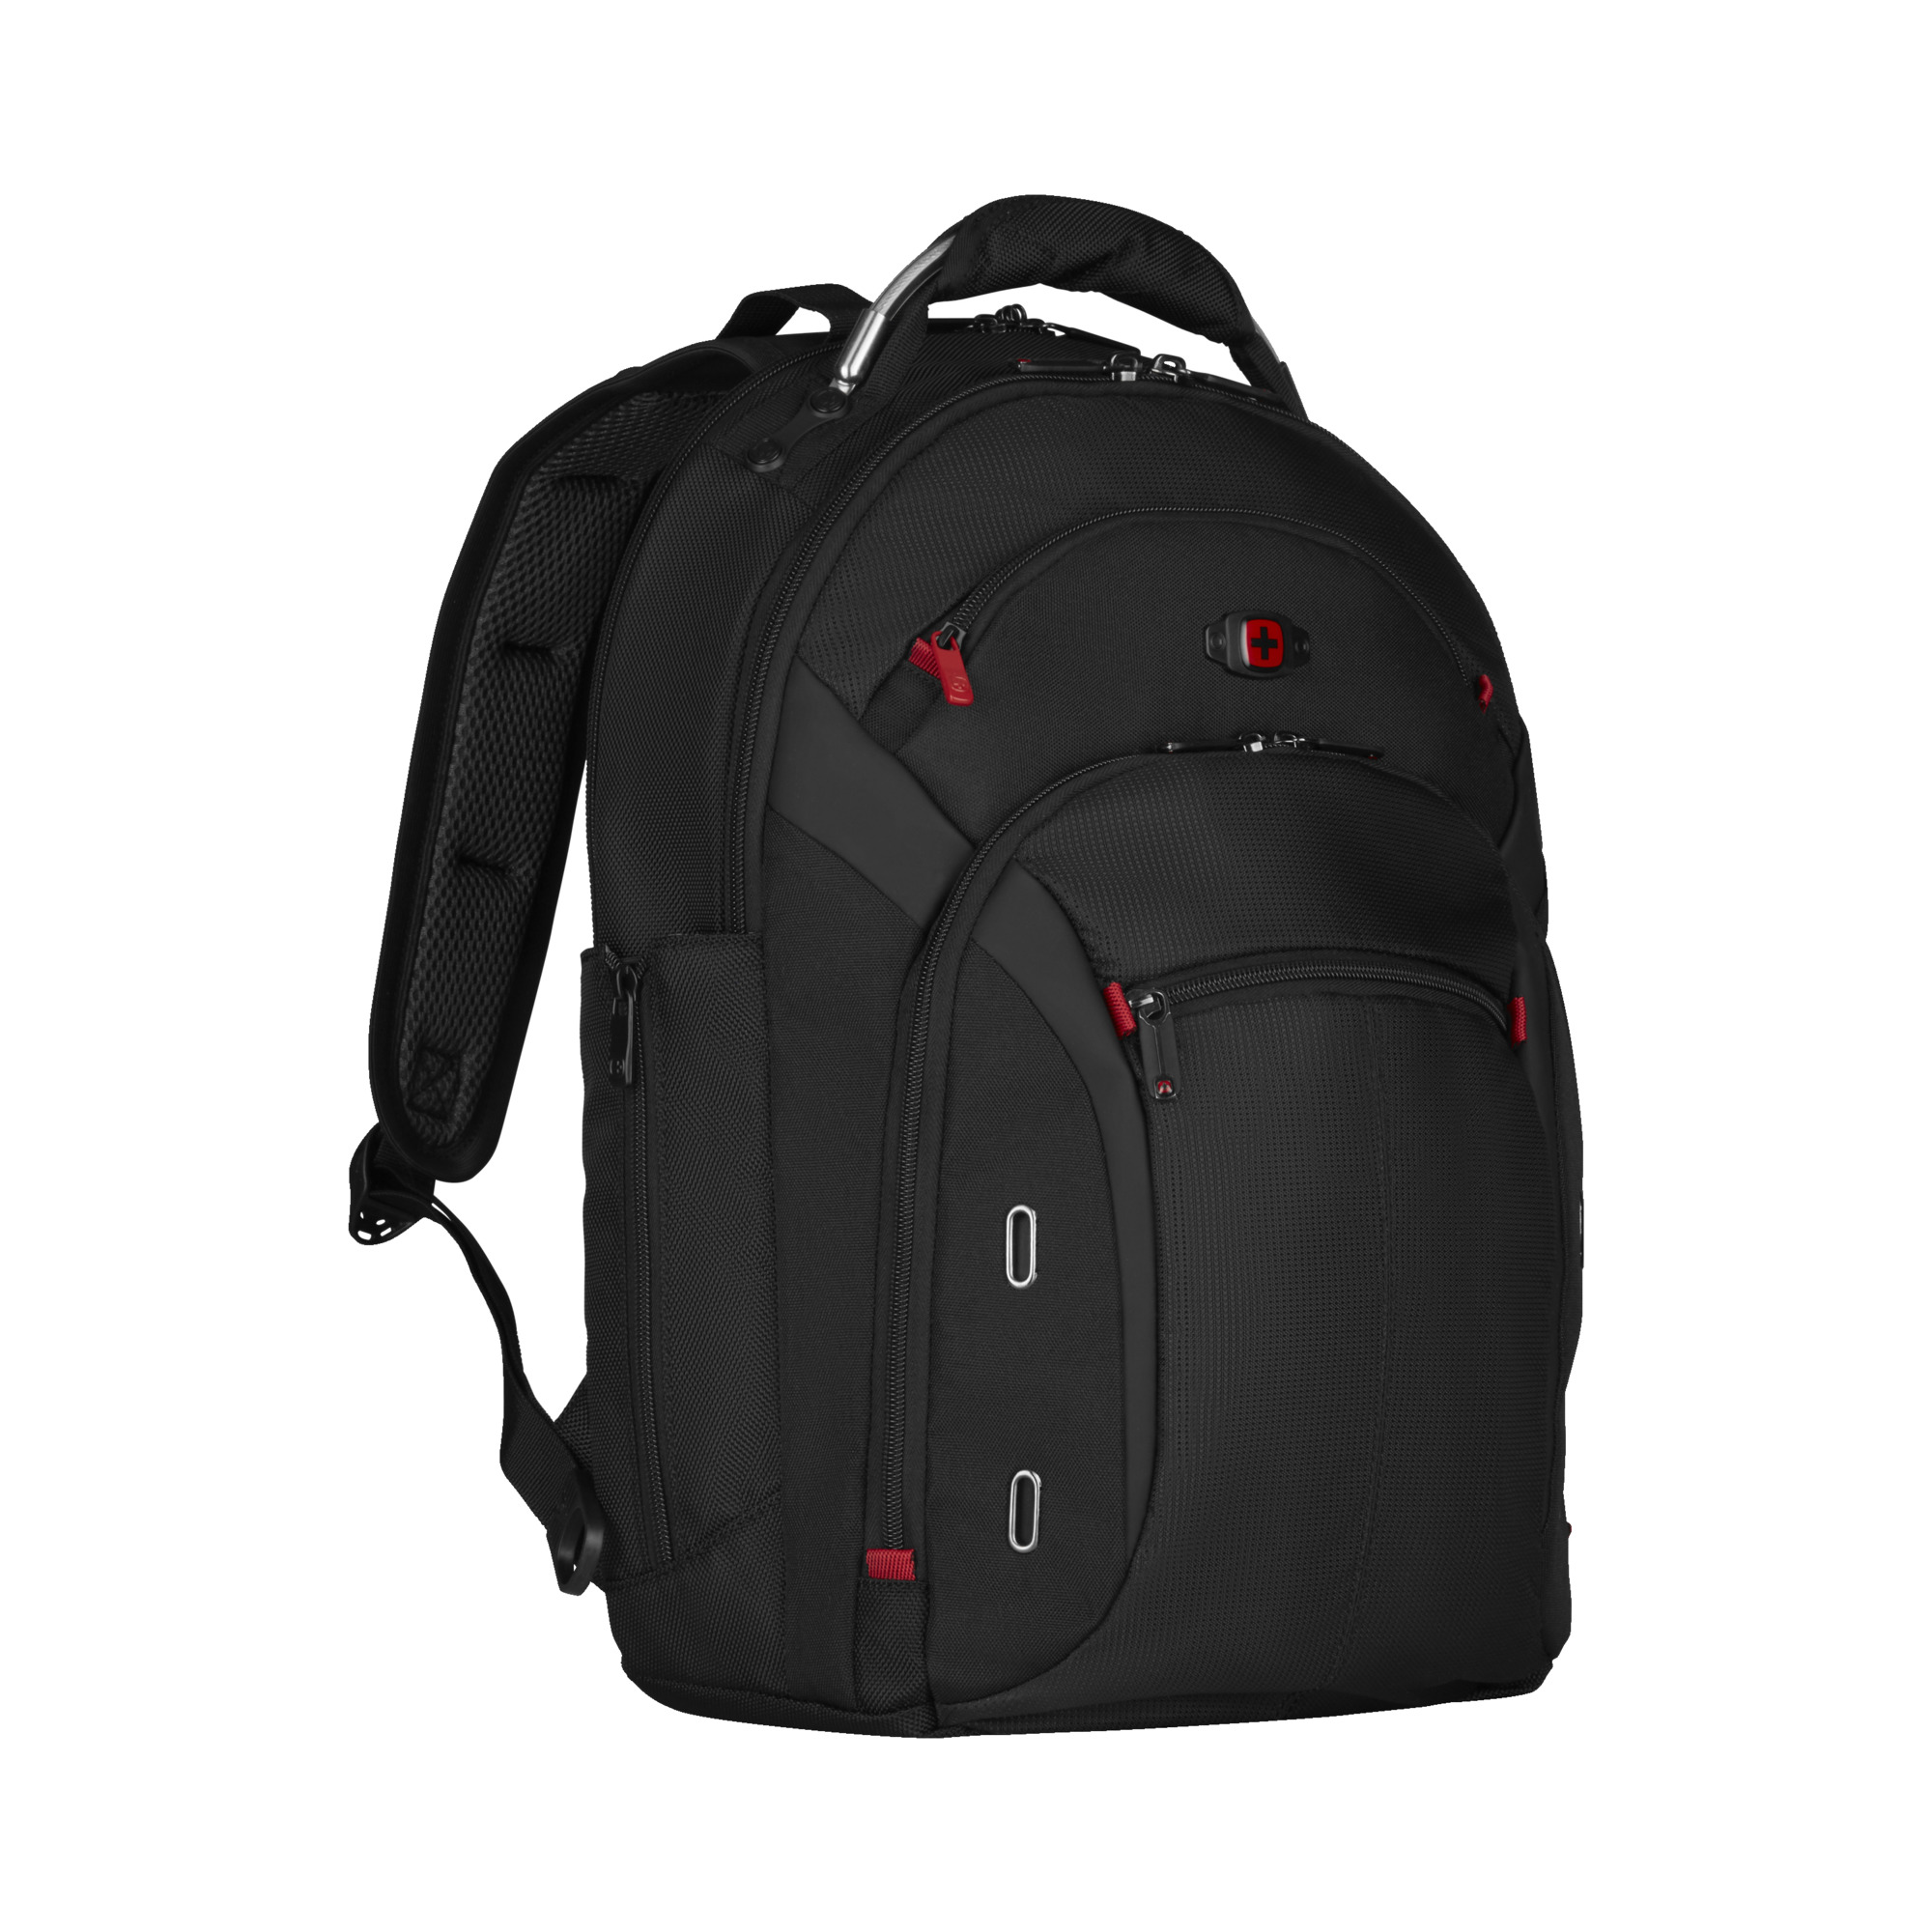 Wenger backpack for 15 inch laptop